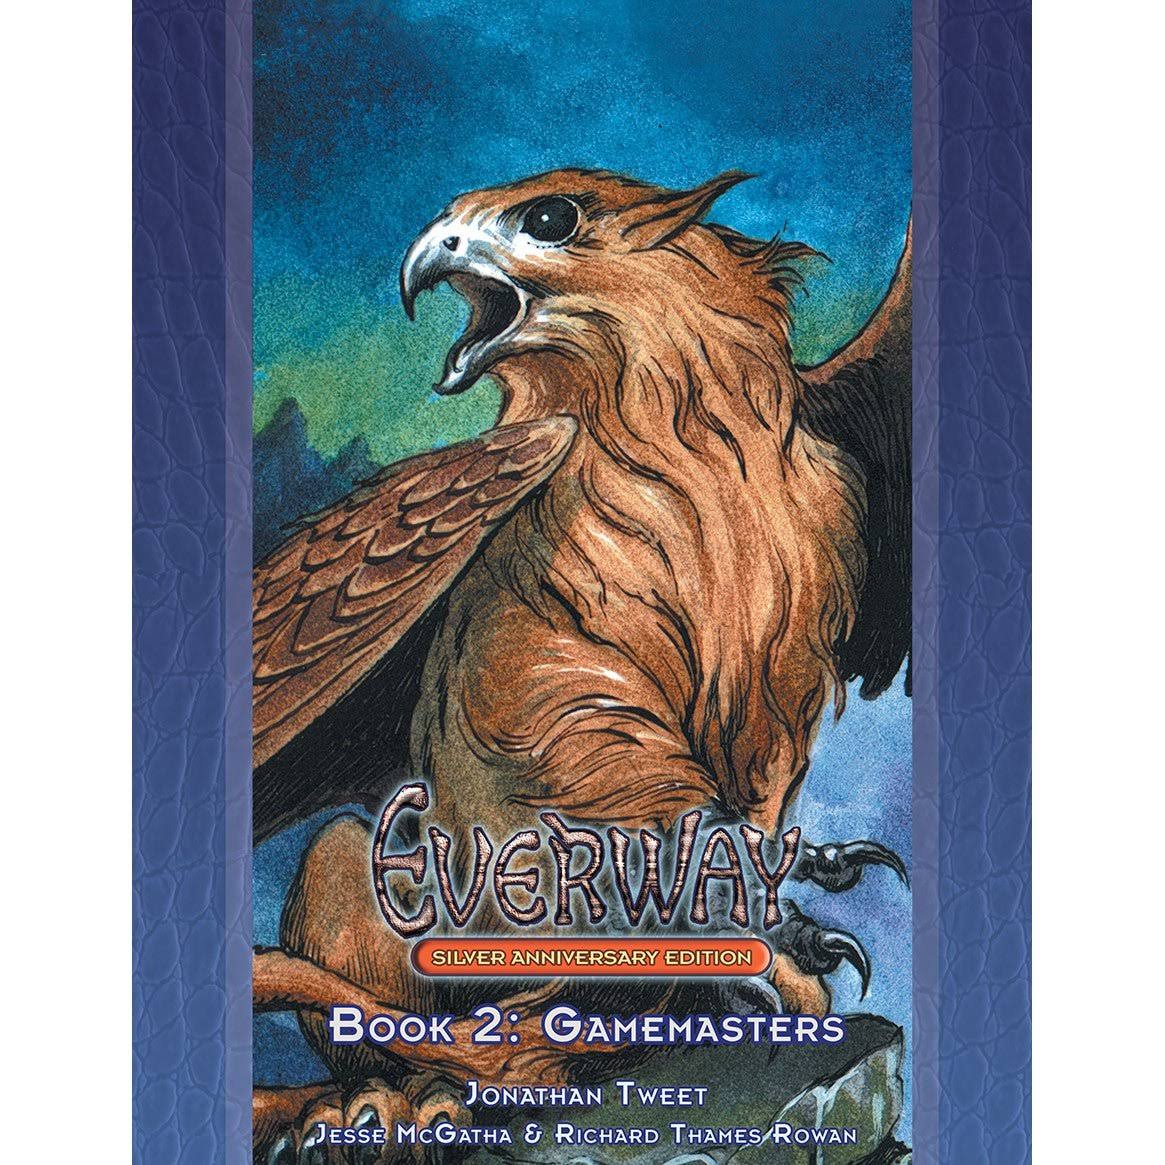 Everway Silver Anniversary Edition: Book 2 - Gamesmasters